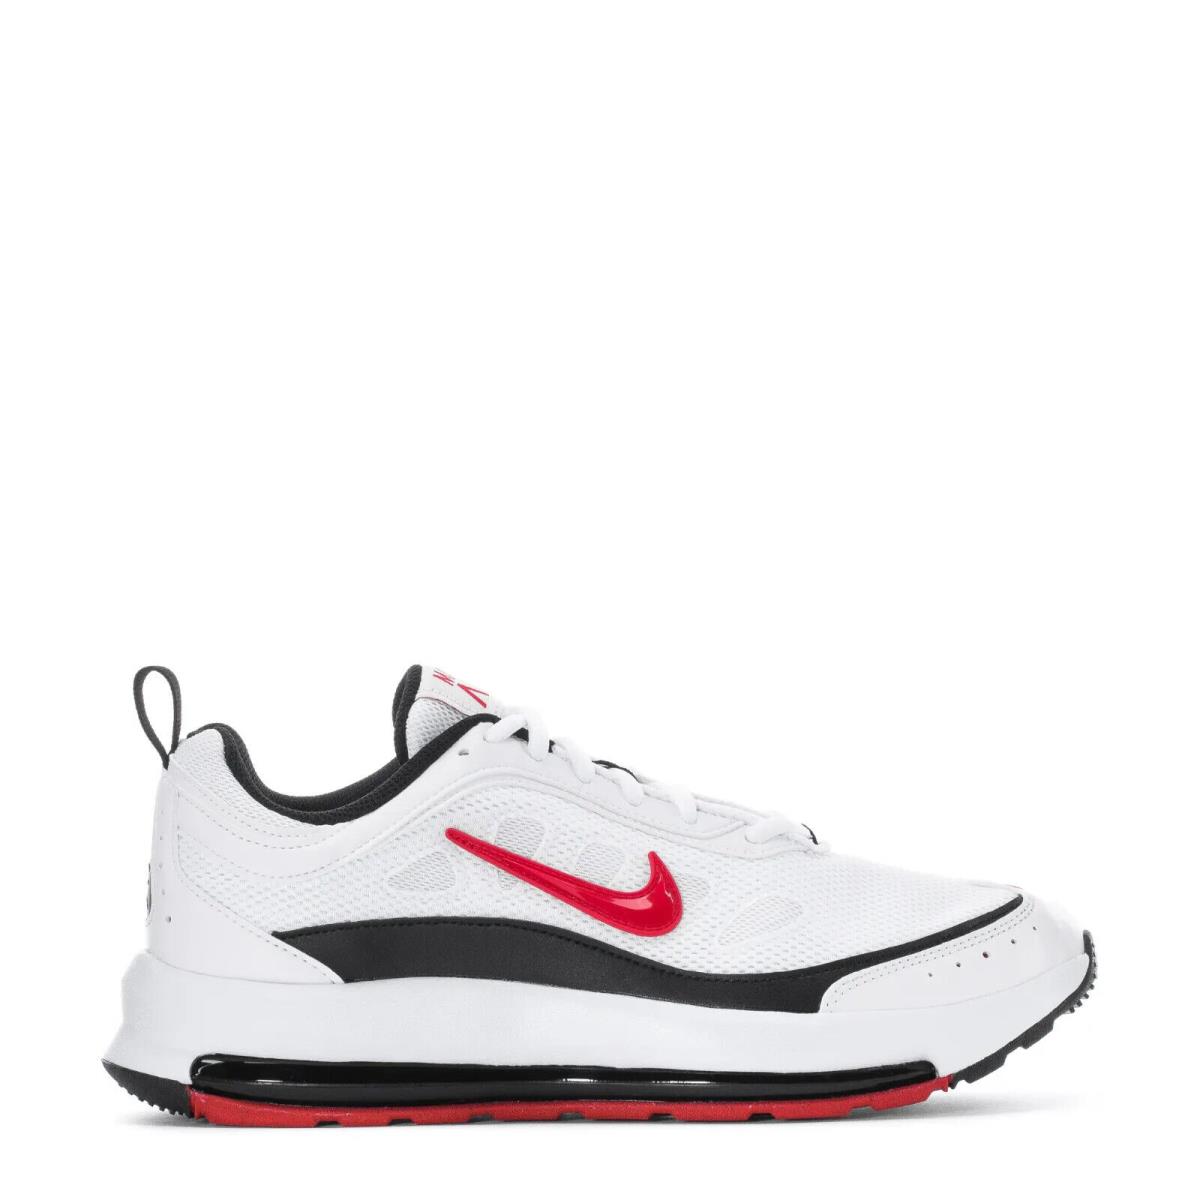 Nike Air Max AP White/university Red/black CU4826-101 Shoes - White